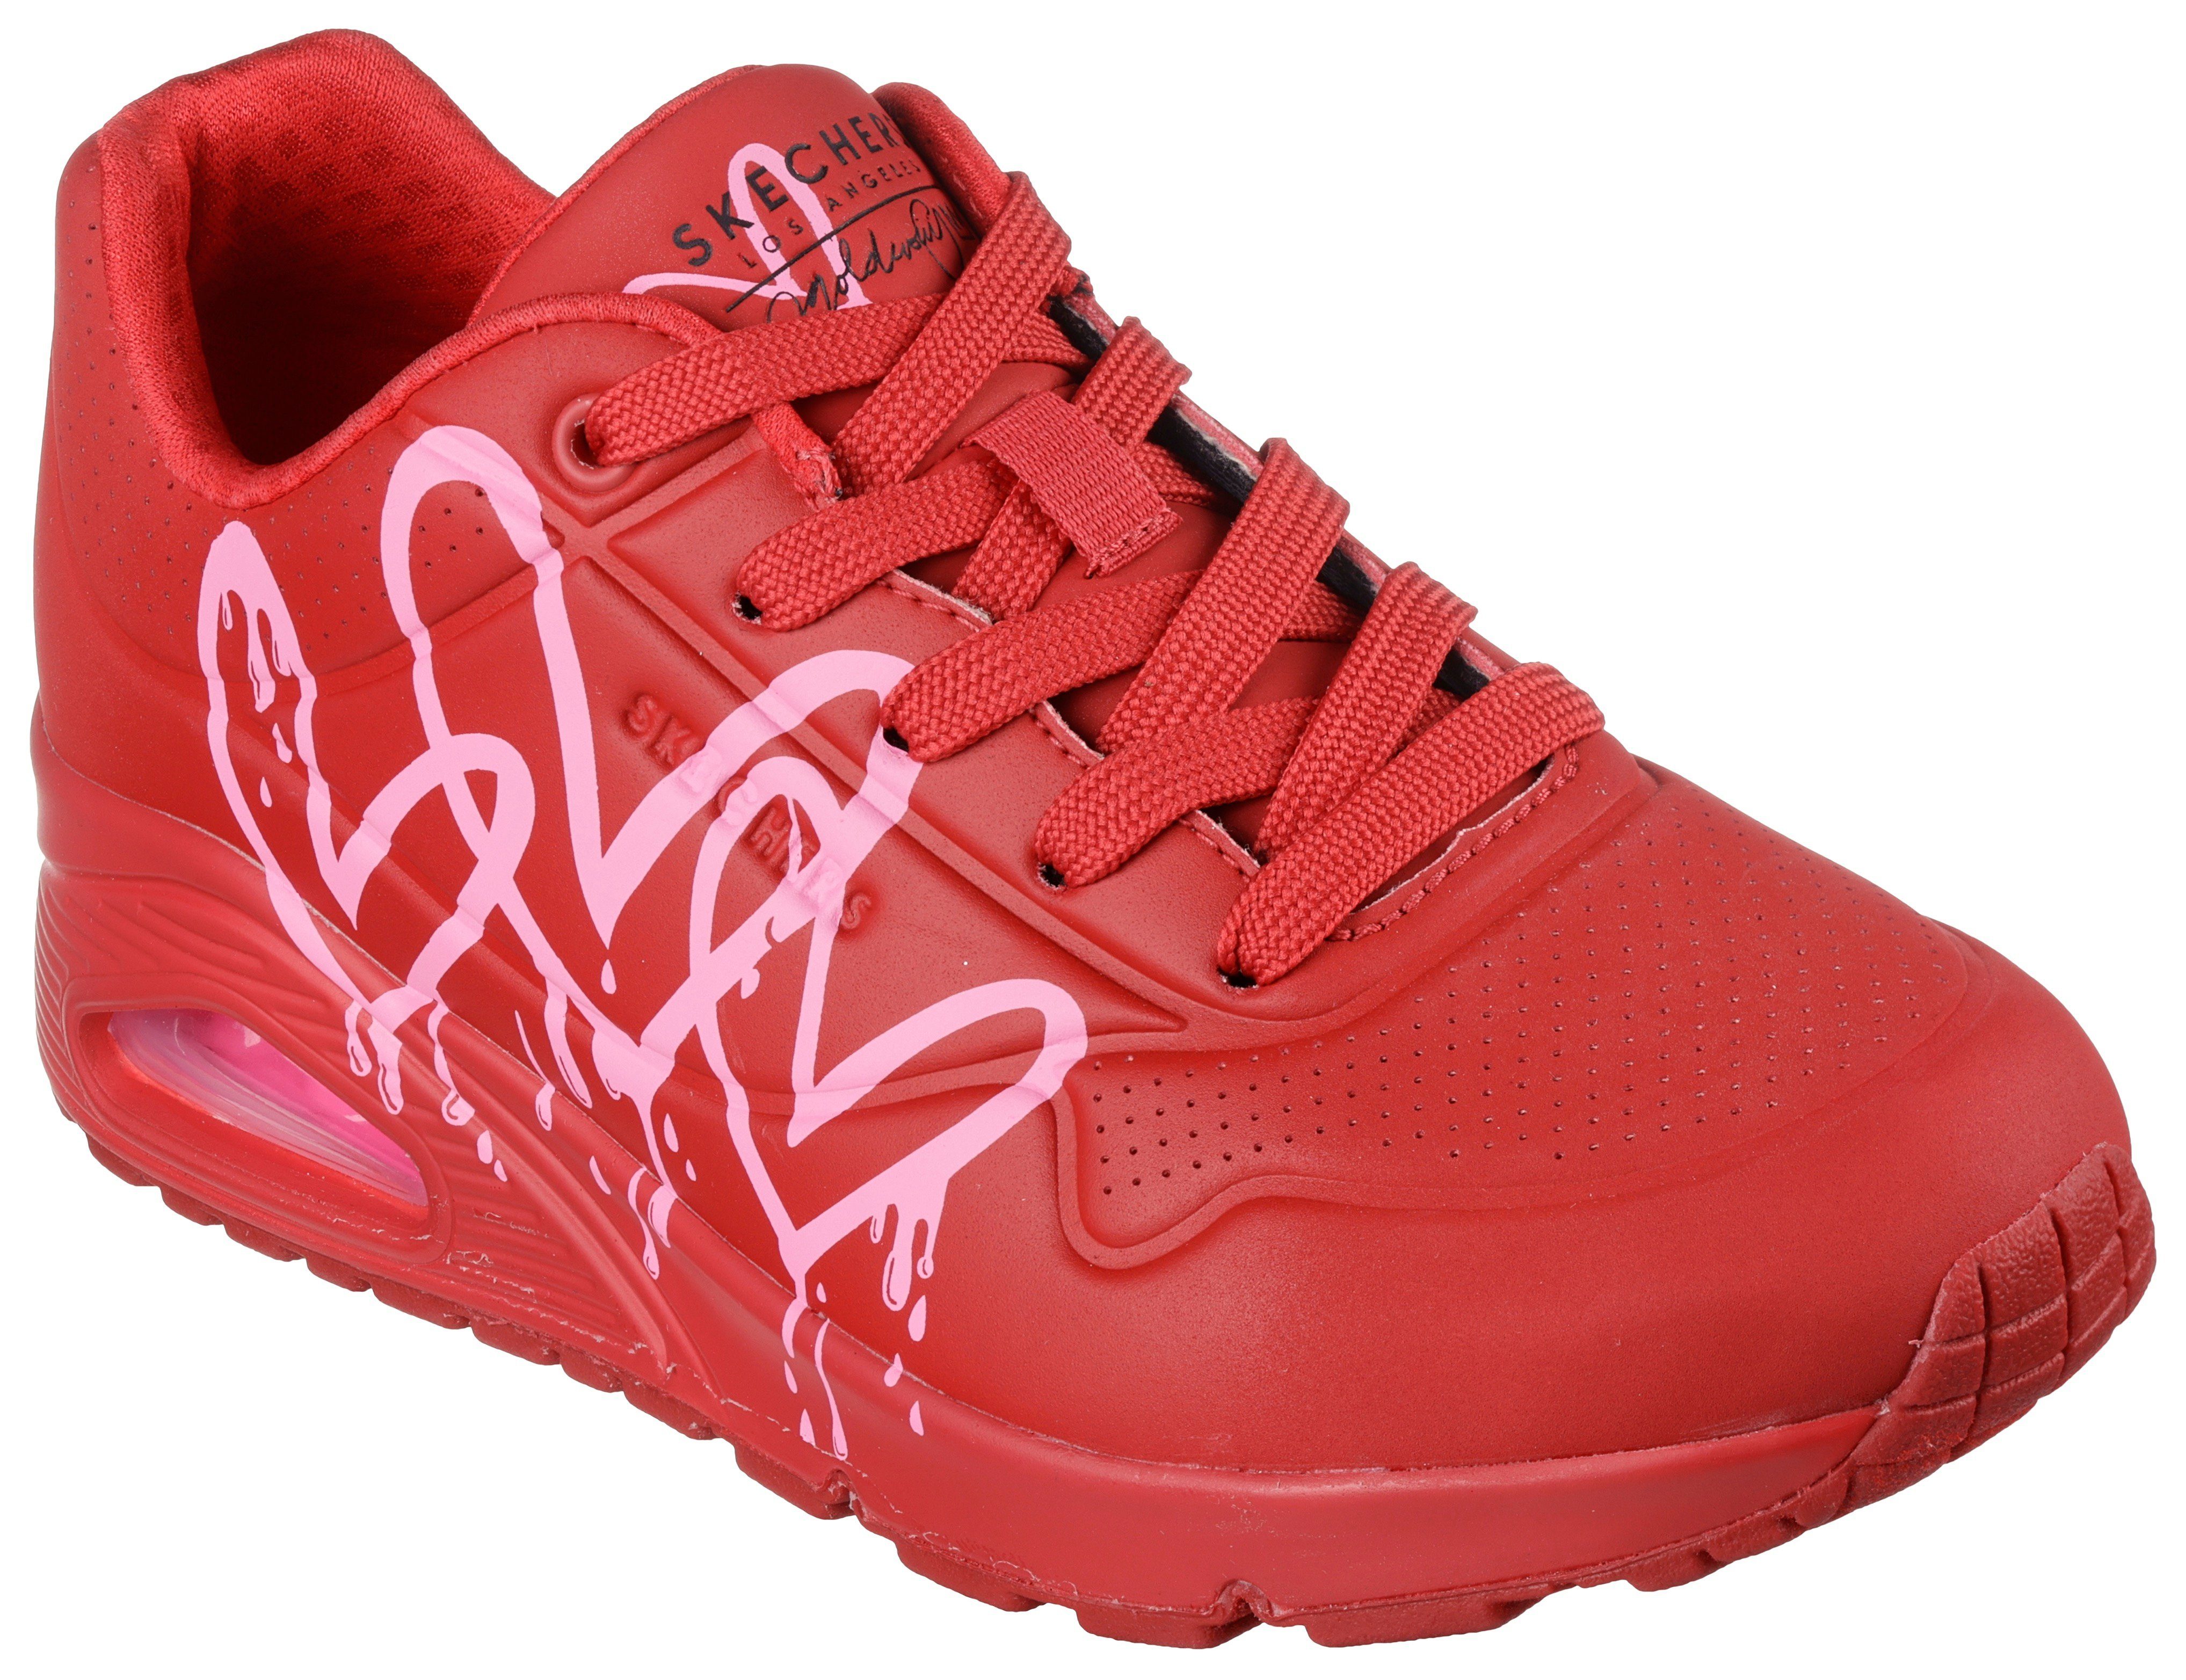 Skechers UNO DRIPPING IN LOVE Sneaker Herzen-Graffity-Print mit rot-pink